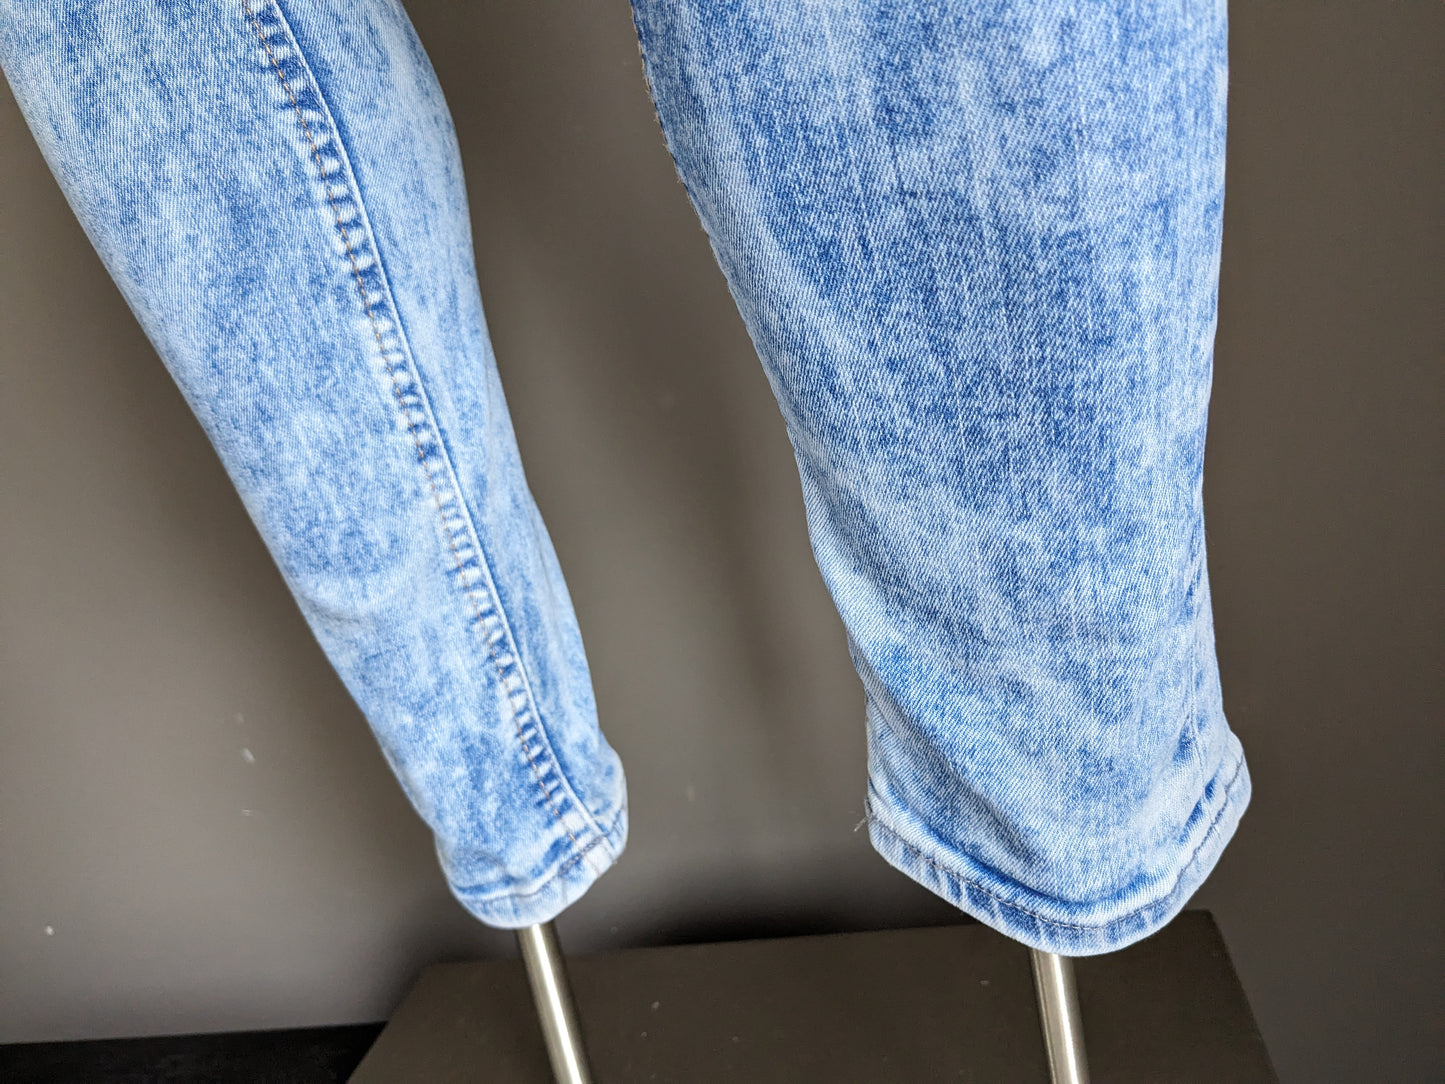 Chasin jeans. Blauw gemeleerd. Maat W32 - L32. Ego Slim. Stretch.